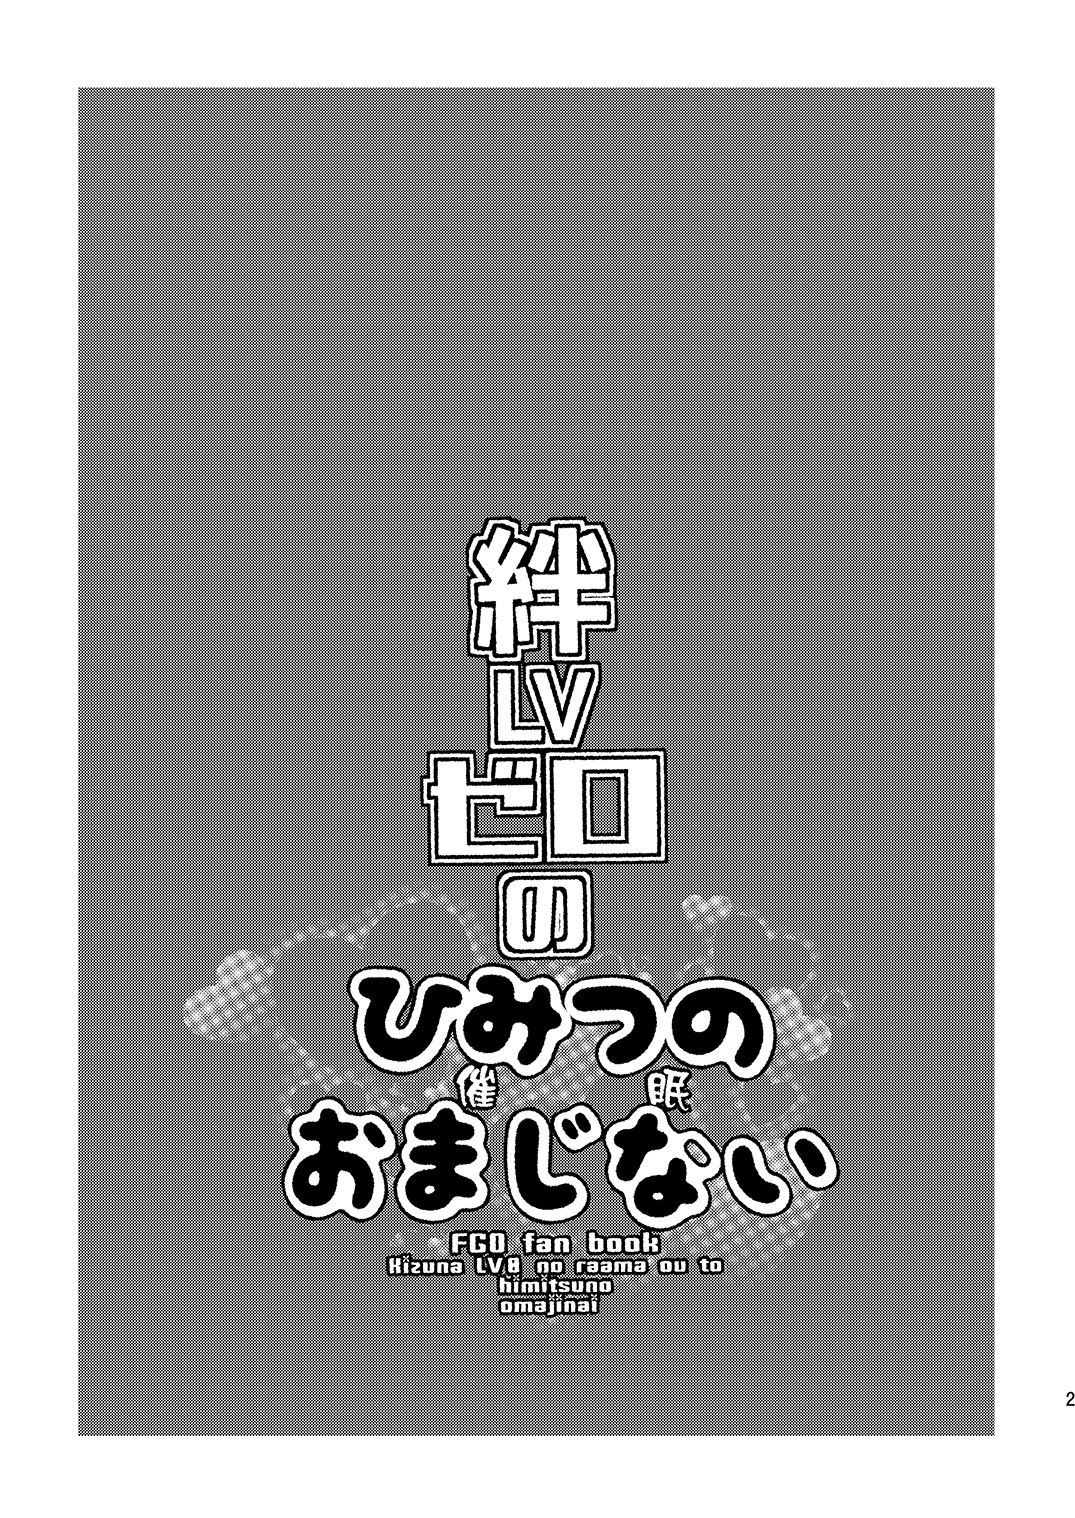 [Mine Noujou (Minemura)] Kizuna LV0 no raama ou to himitsuno omajinai (Fate/Grand Order) [Chinese] [逃亡者x新桥月白日语社汉化] [Digital] [ミネ農場 (ミネむら)] 絆LVゼロのひみつのおまじない (Fate/Grand Order) [中国翻訳] [DL版]